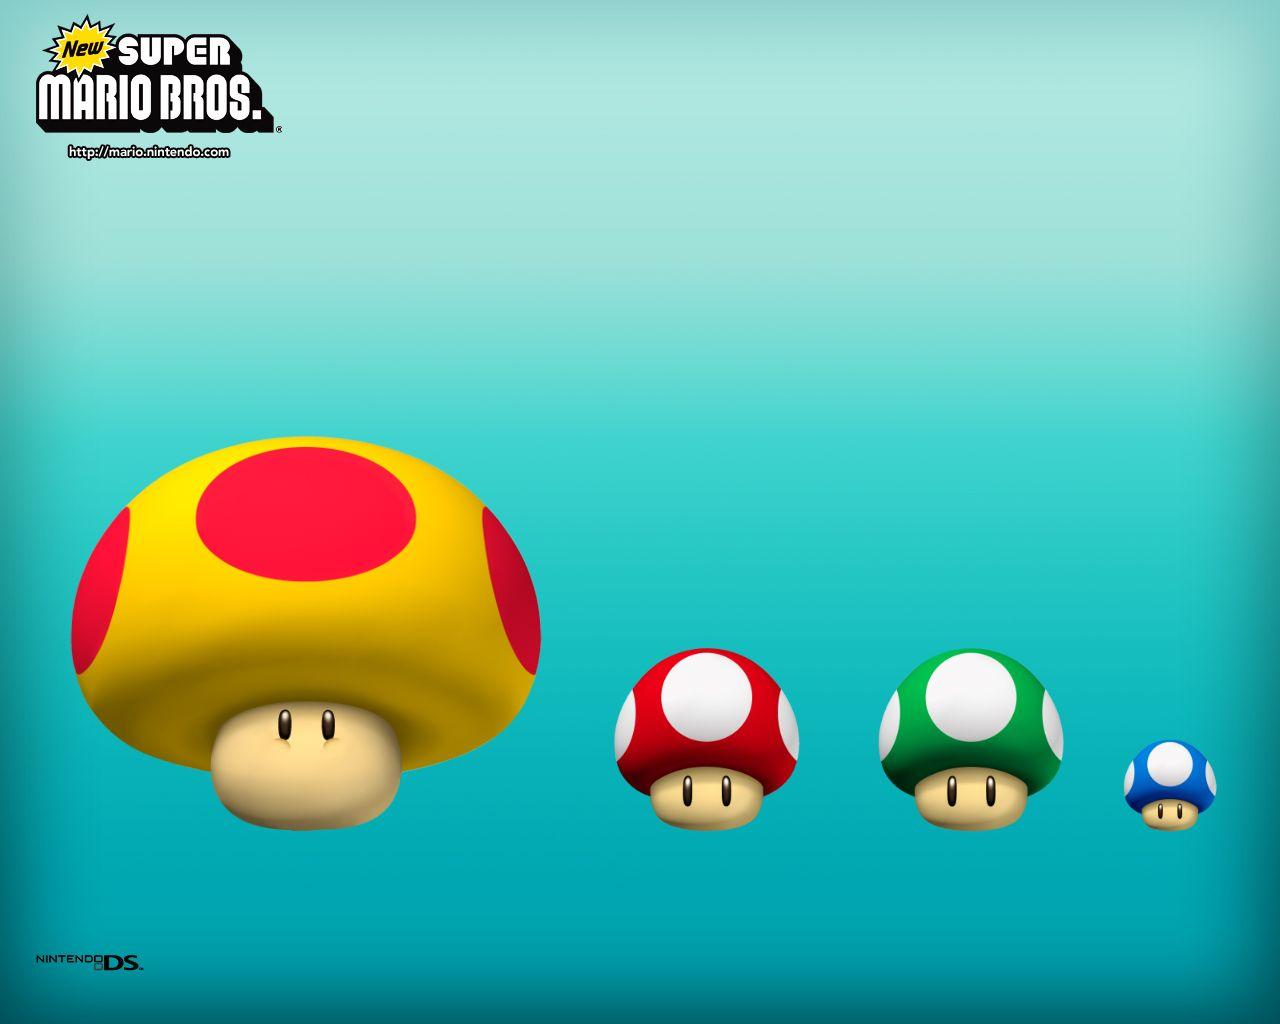 TMK. Downloads. Image. New Super Mario Bros. (NDS)